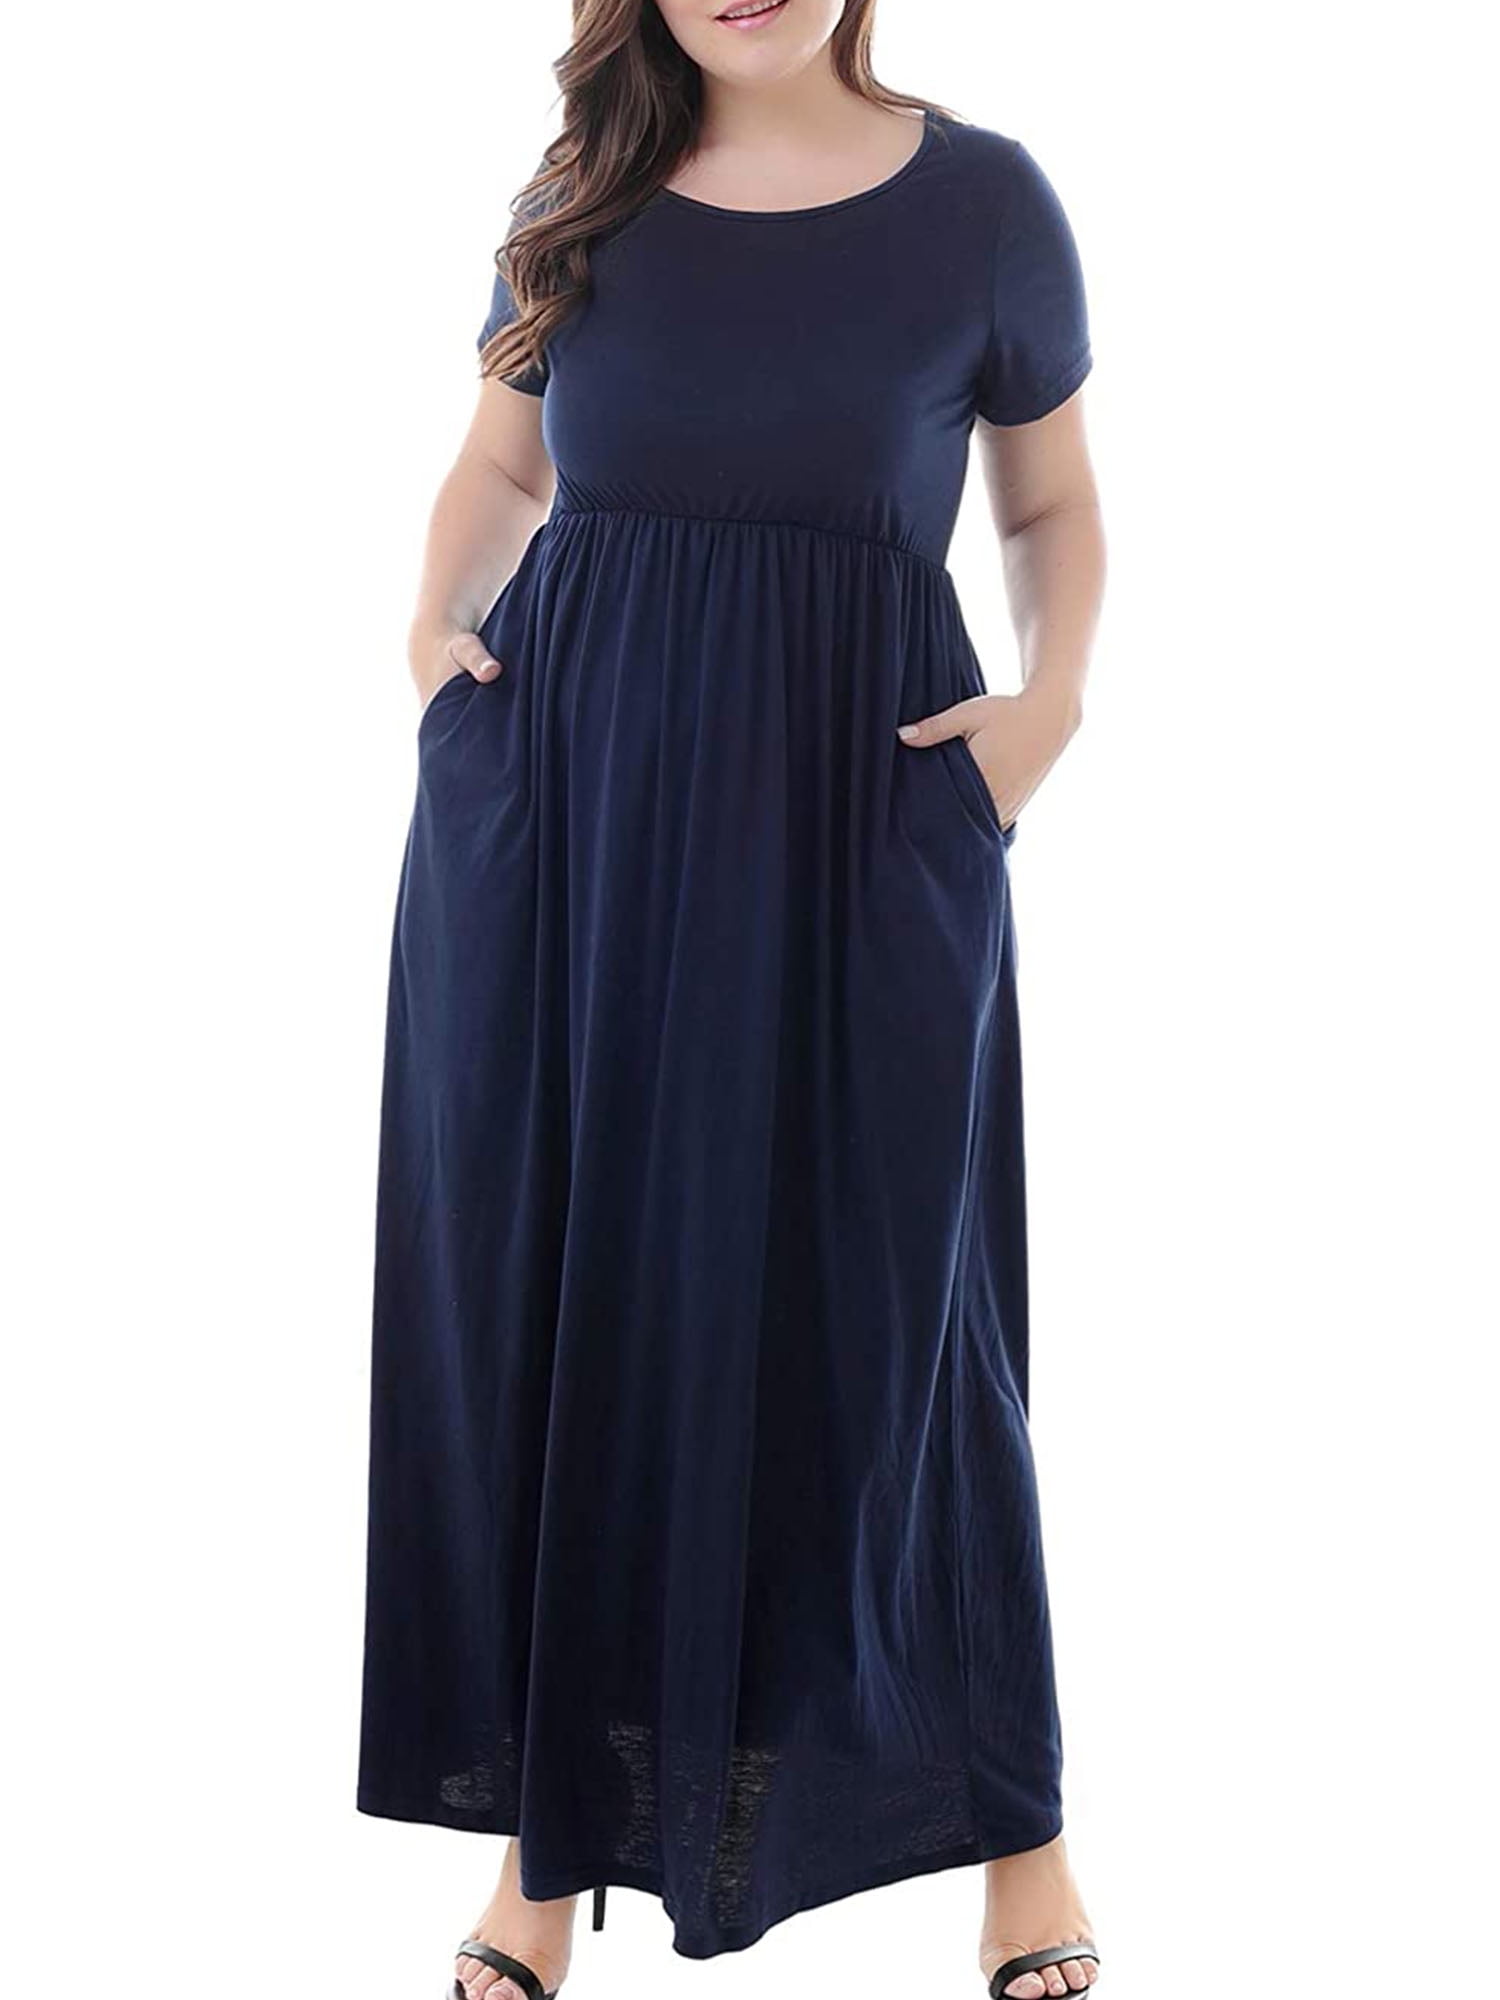 Freemale Womens Long Sleeve Crewneck Plain Casual Dress Long Maxi Dresses with Pockets